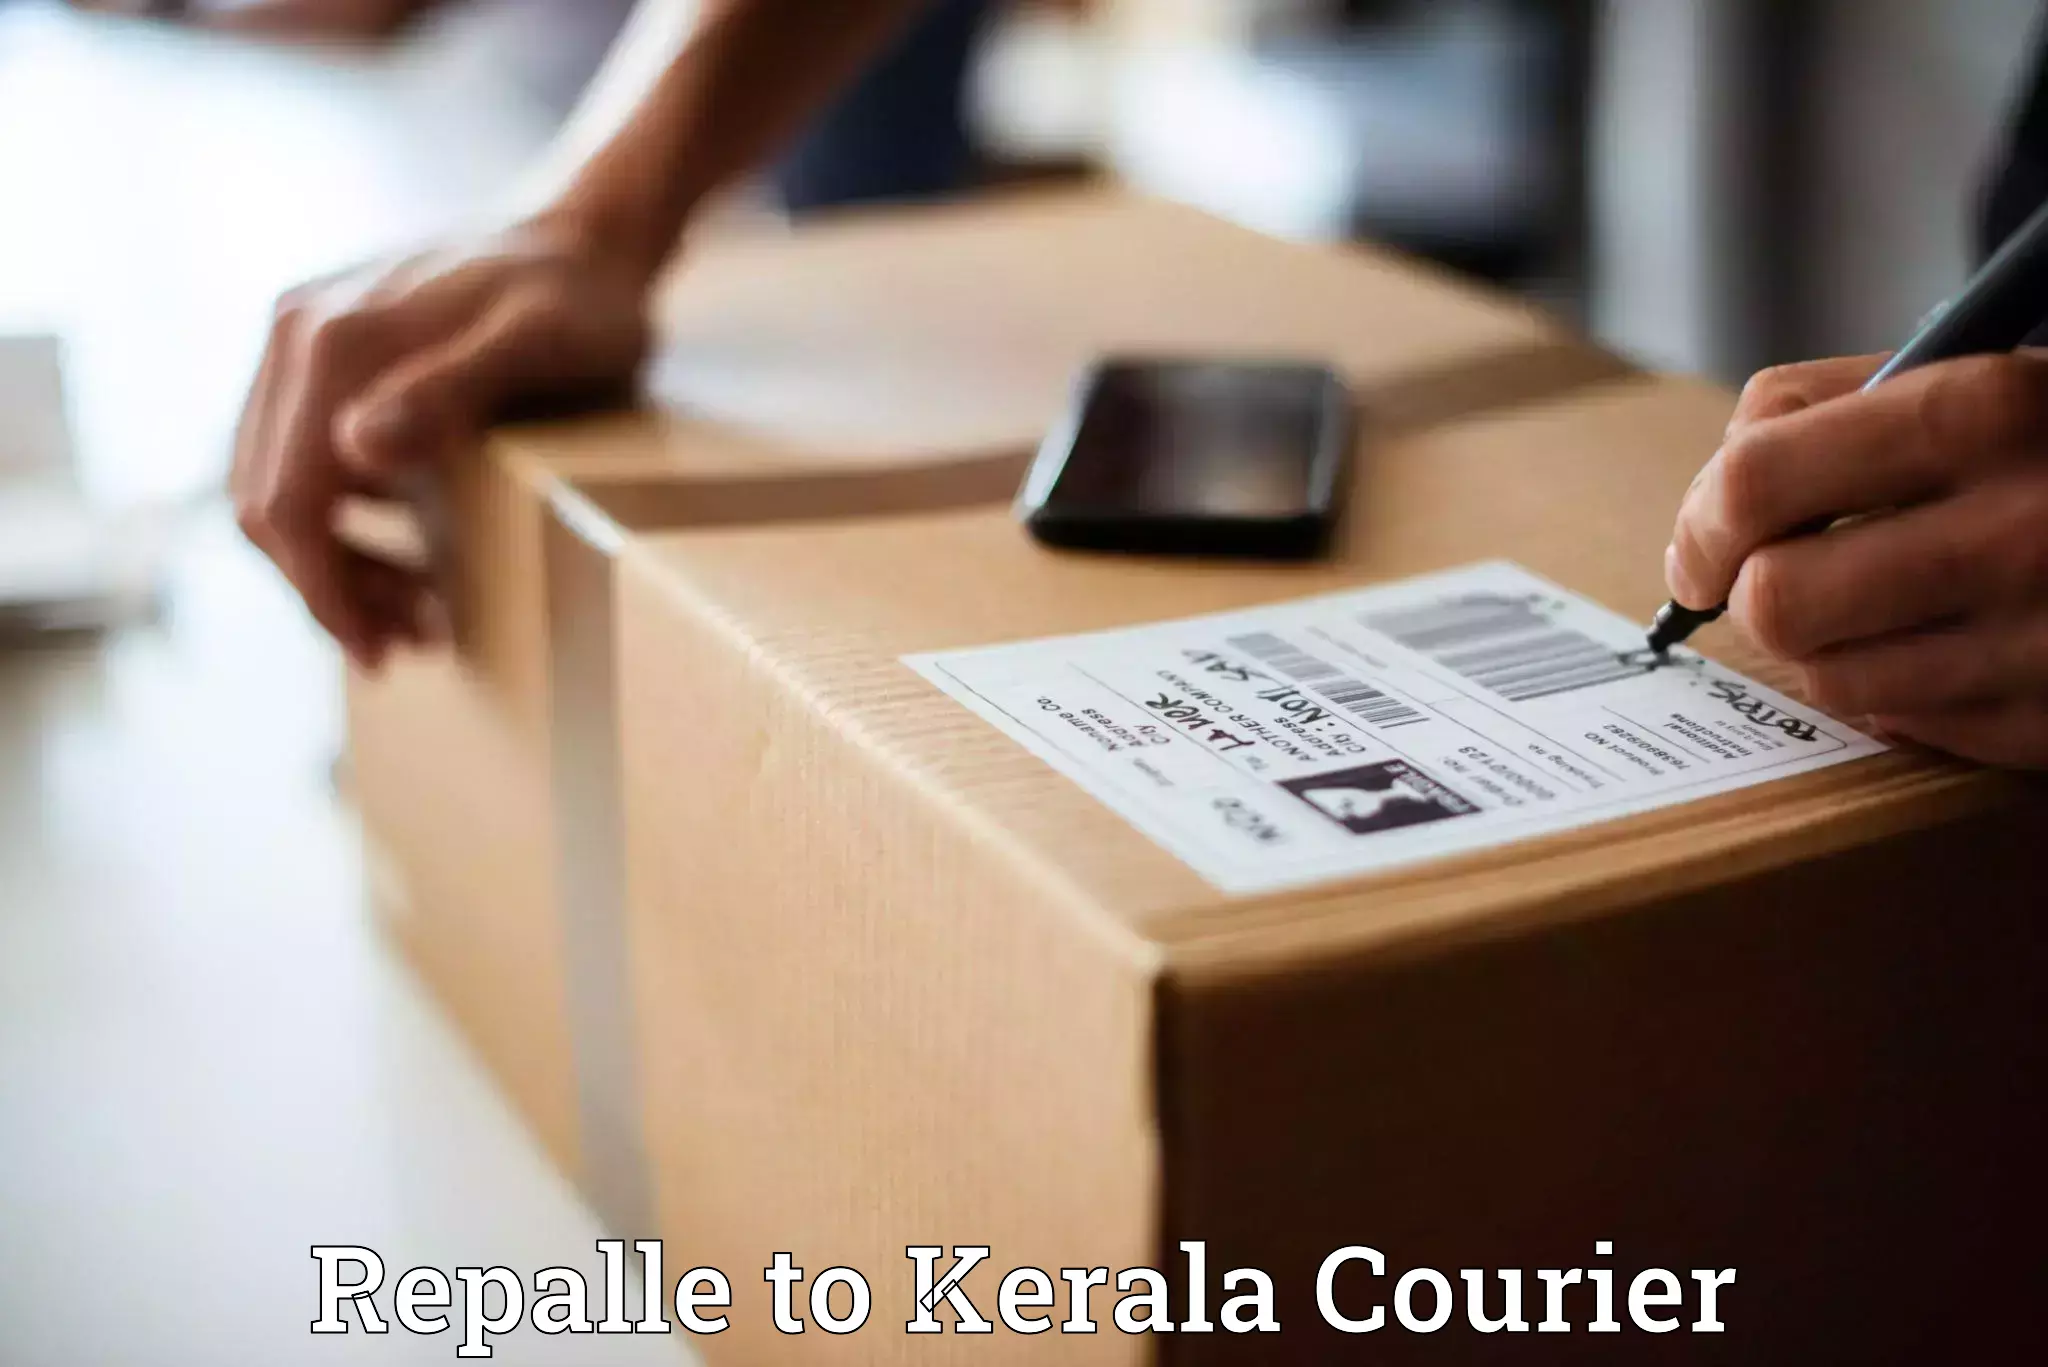 Customer-focused courier Repalle to Kodungallur